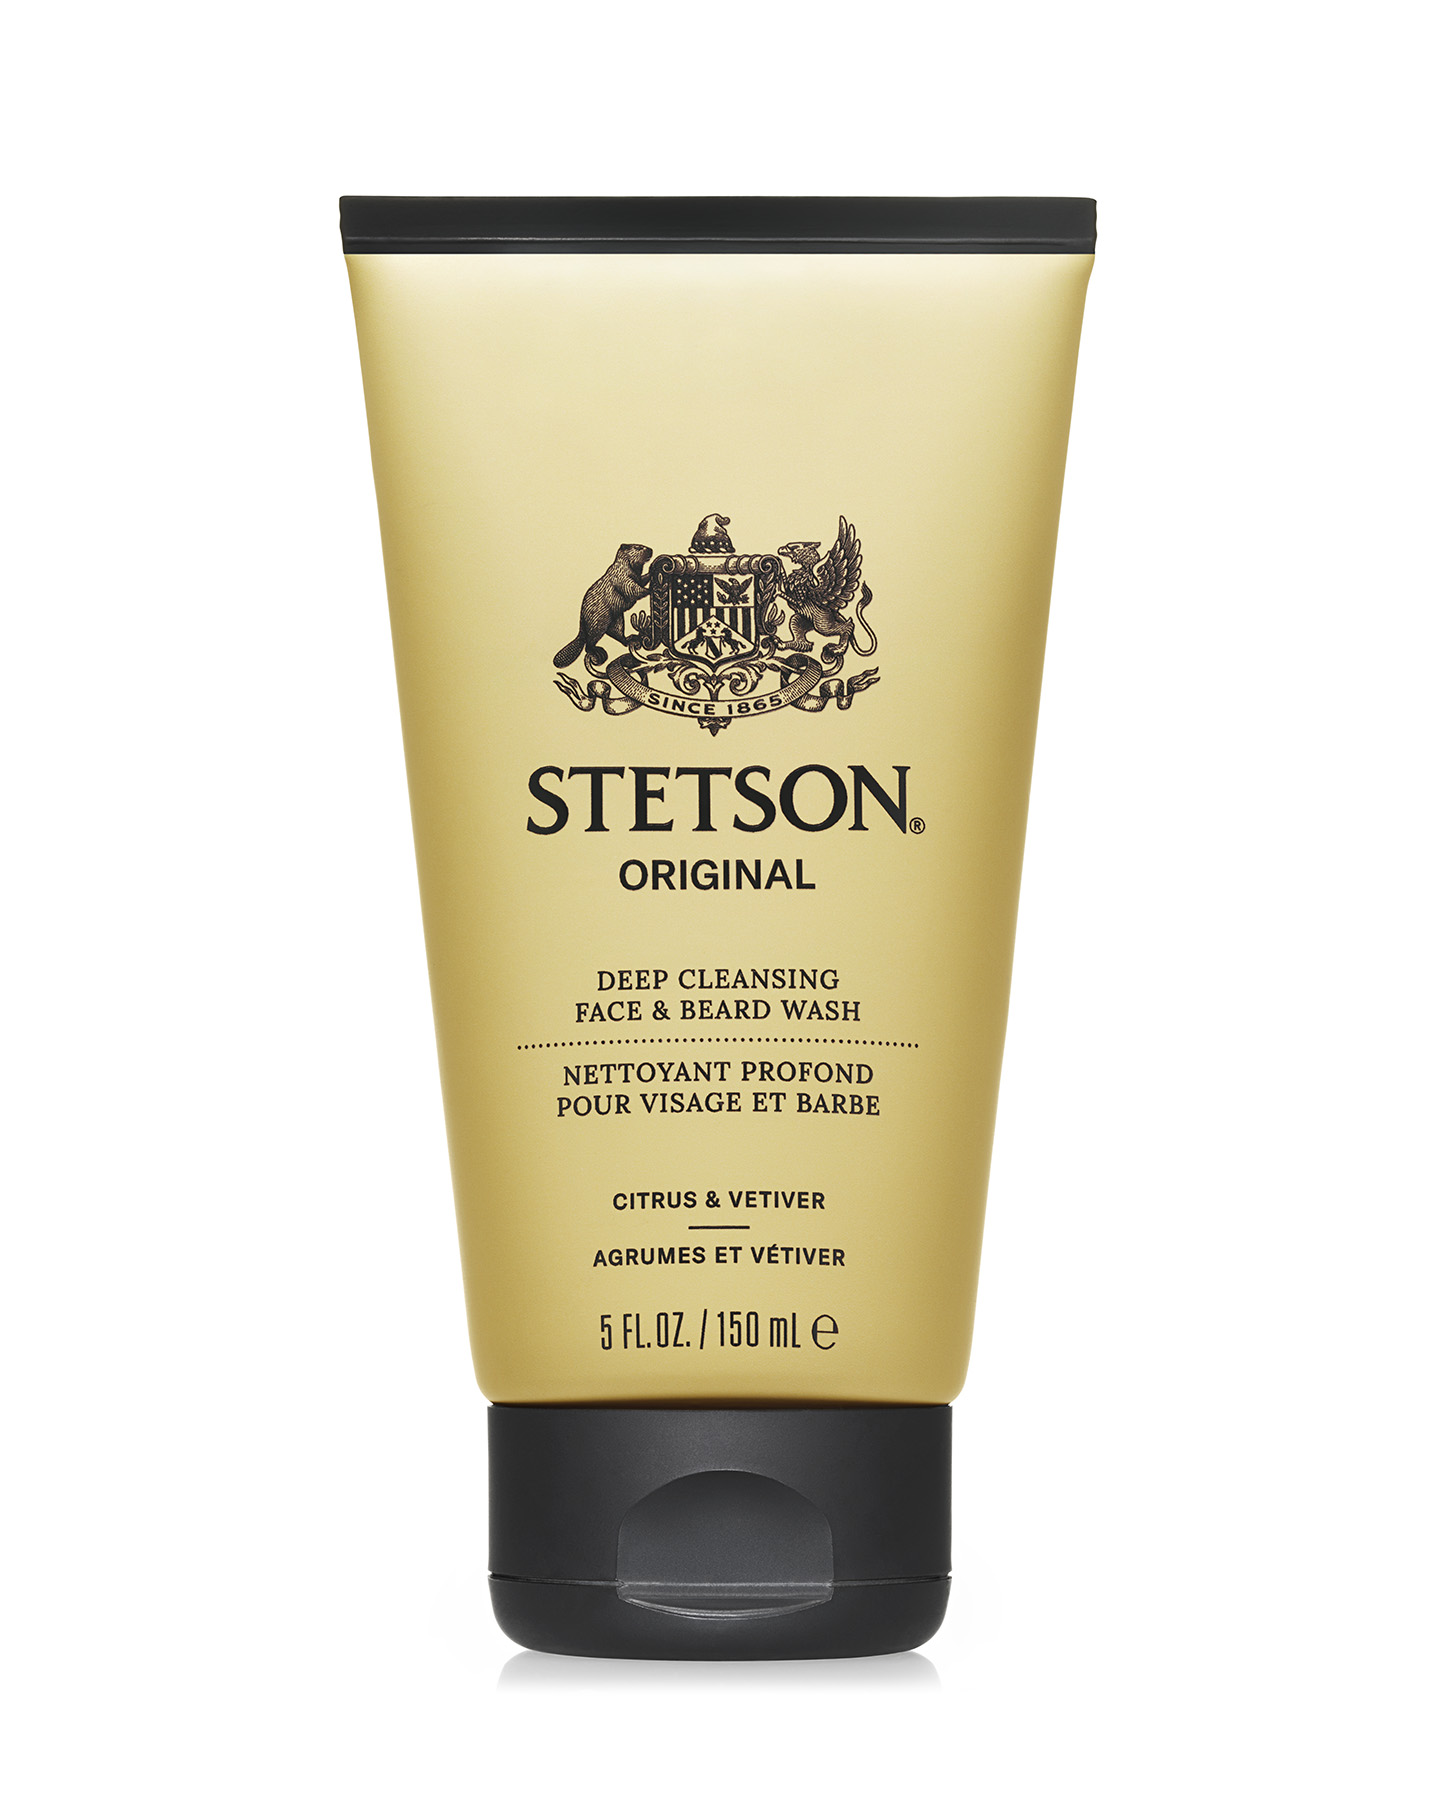 Stetson Original 2PC 1.5oz Original Cologne + Face Wash: $4.99